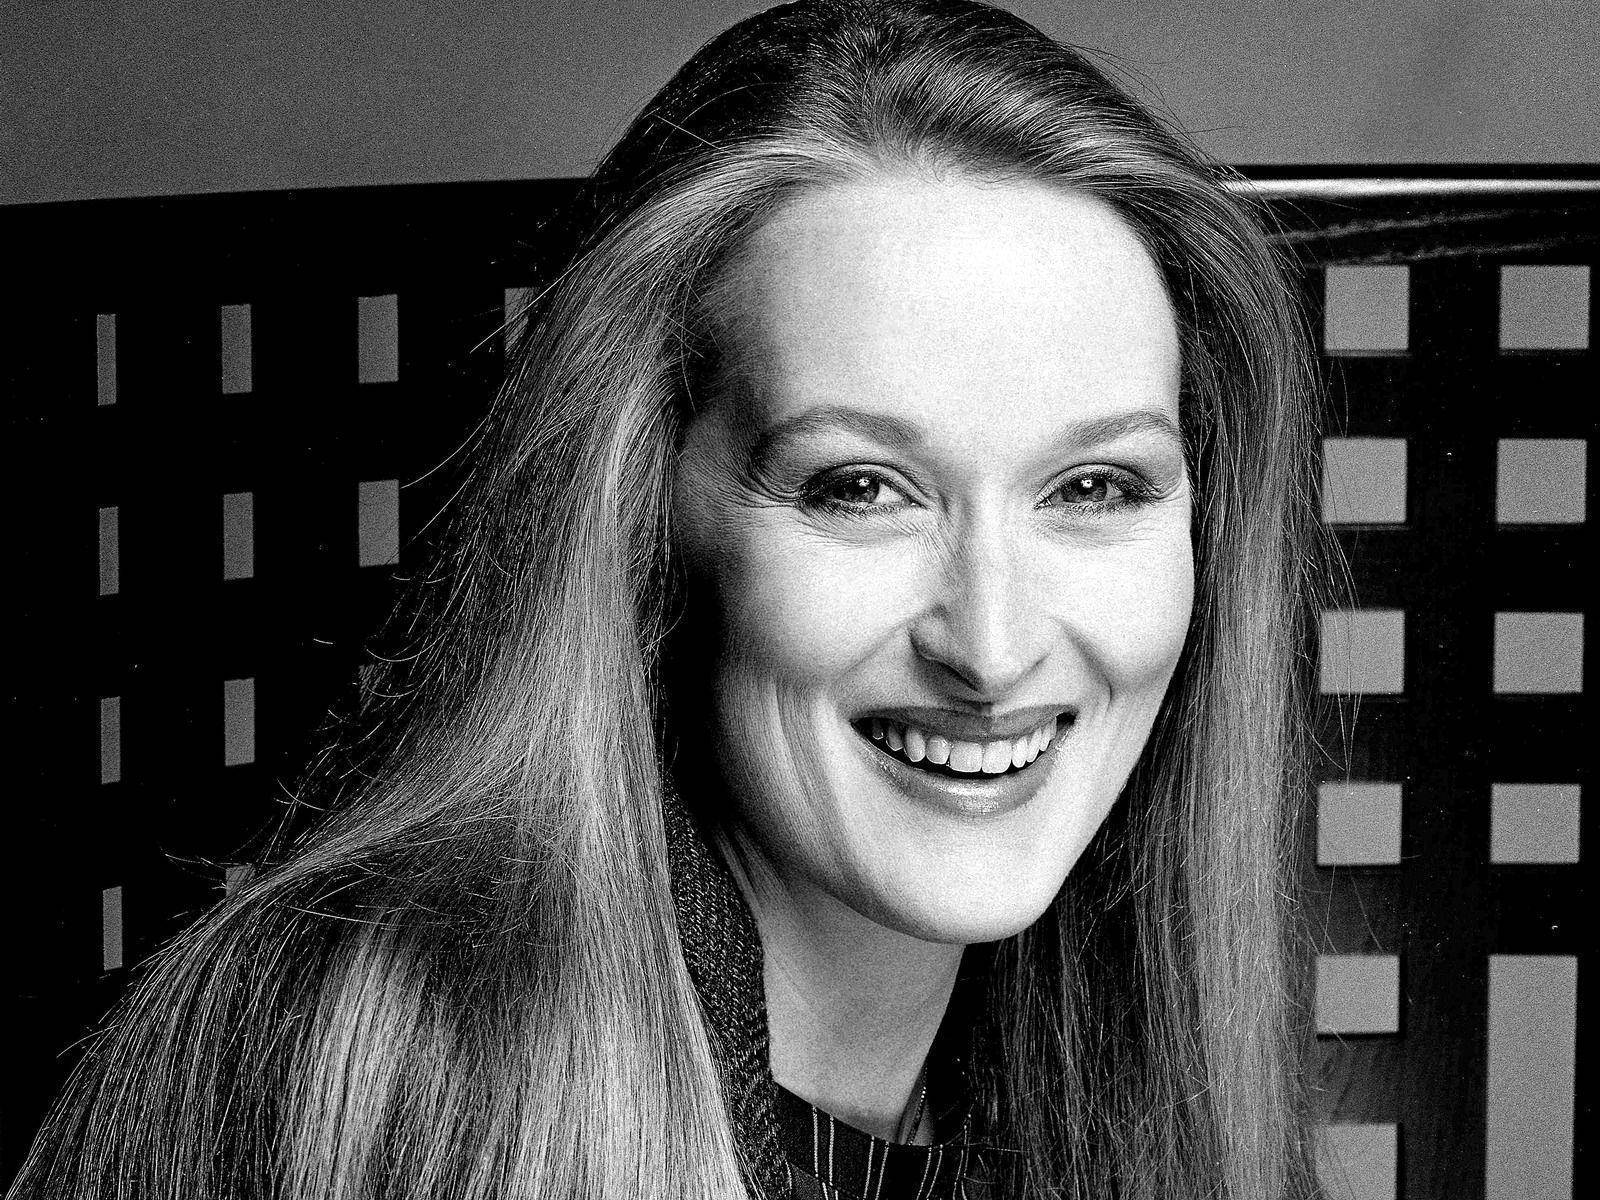 Old Image Of Actress Meryl Streep